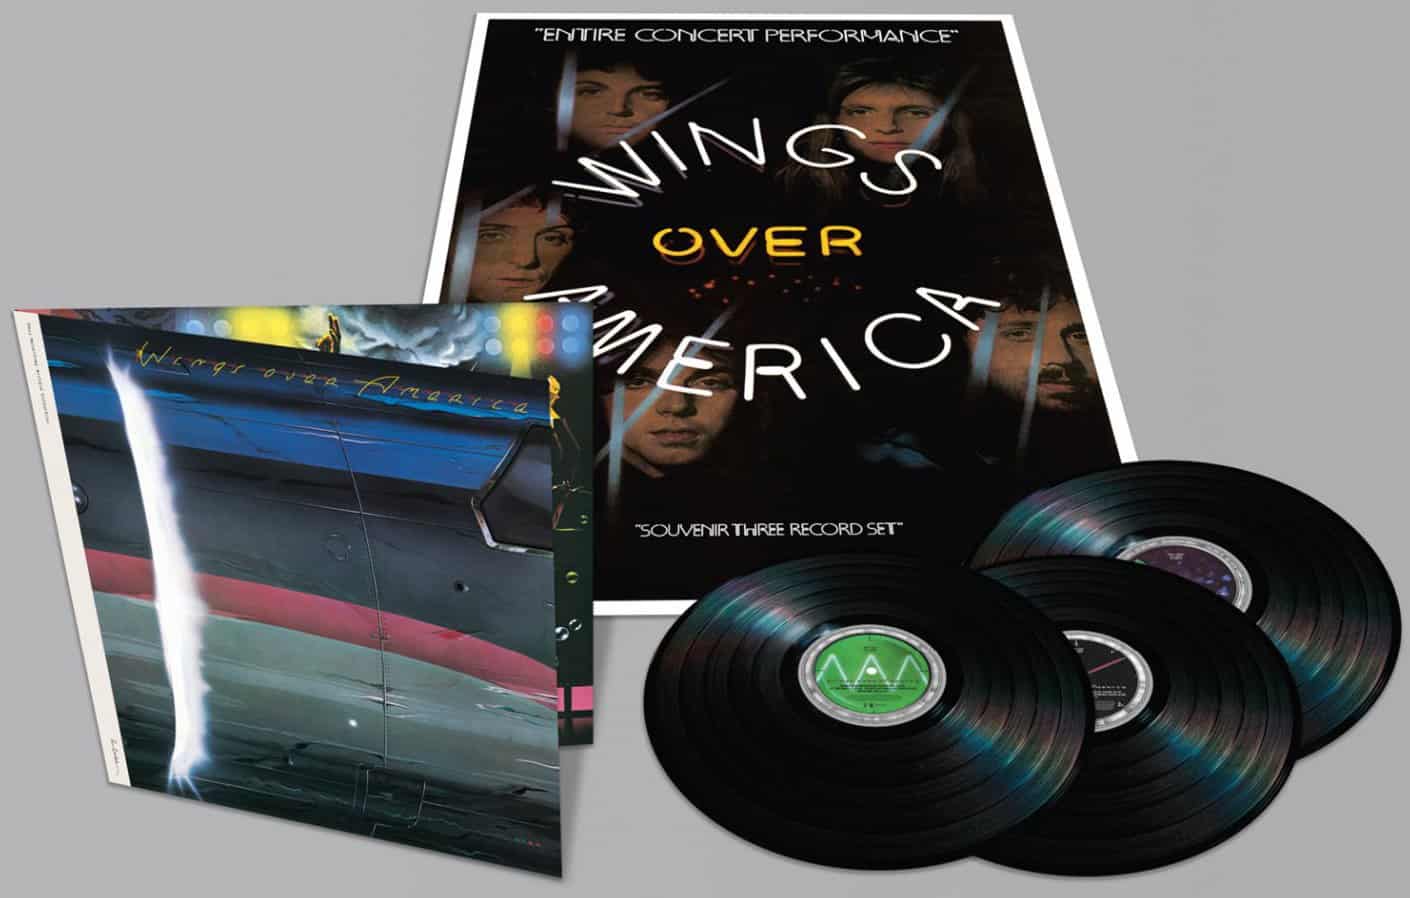 Paul-McCartney-Wings-Over-America-vinyl-record-album-front